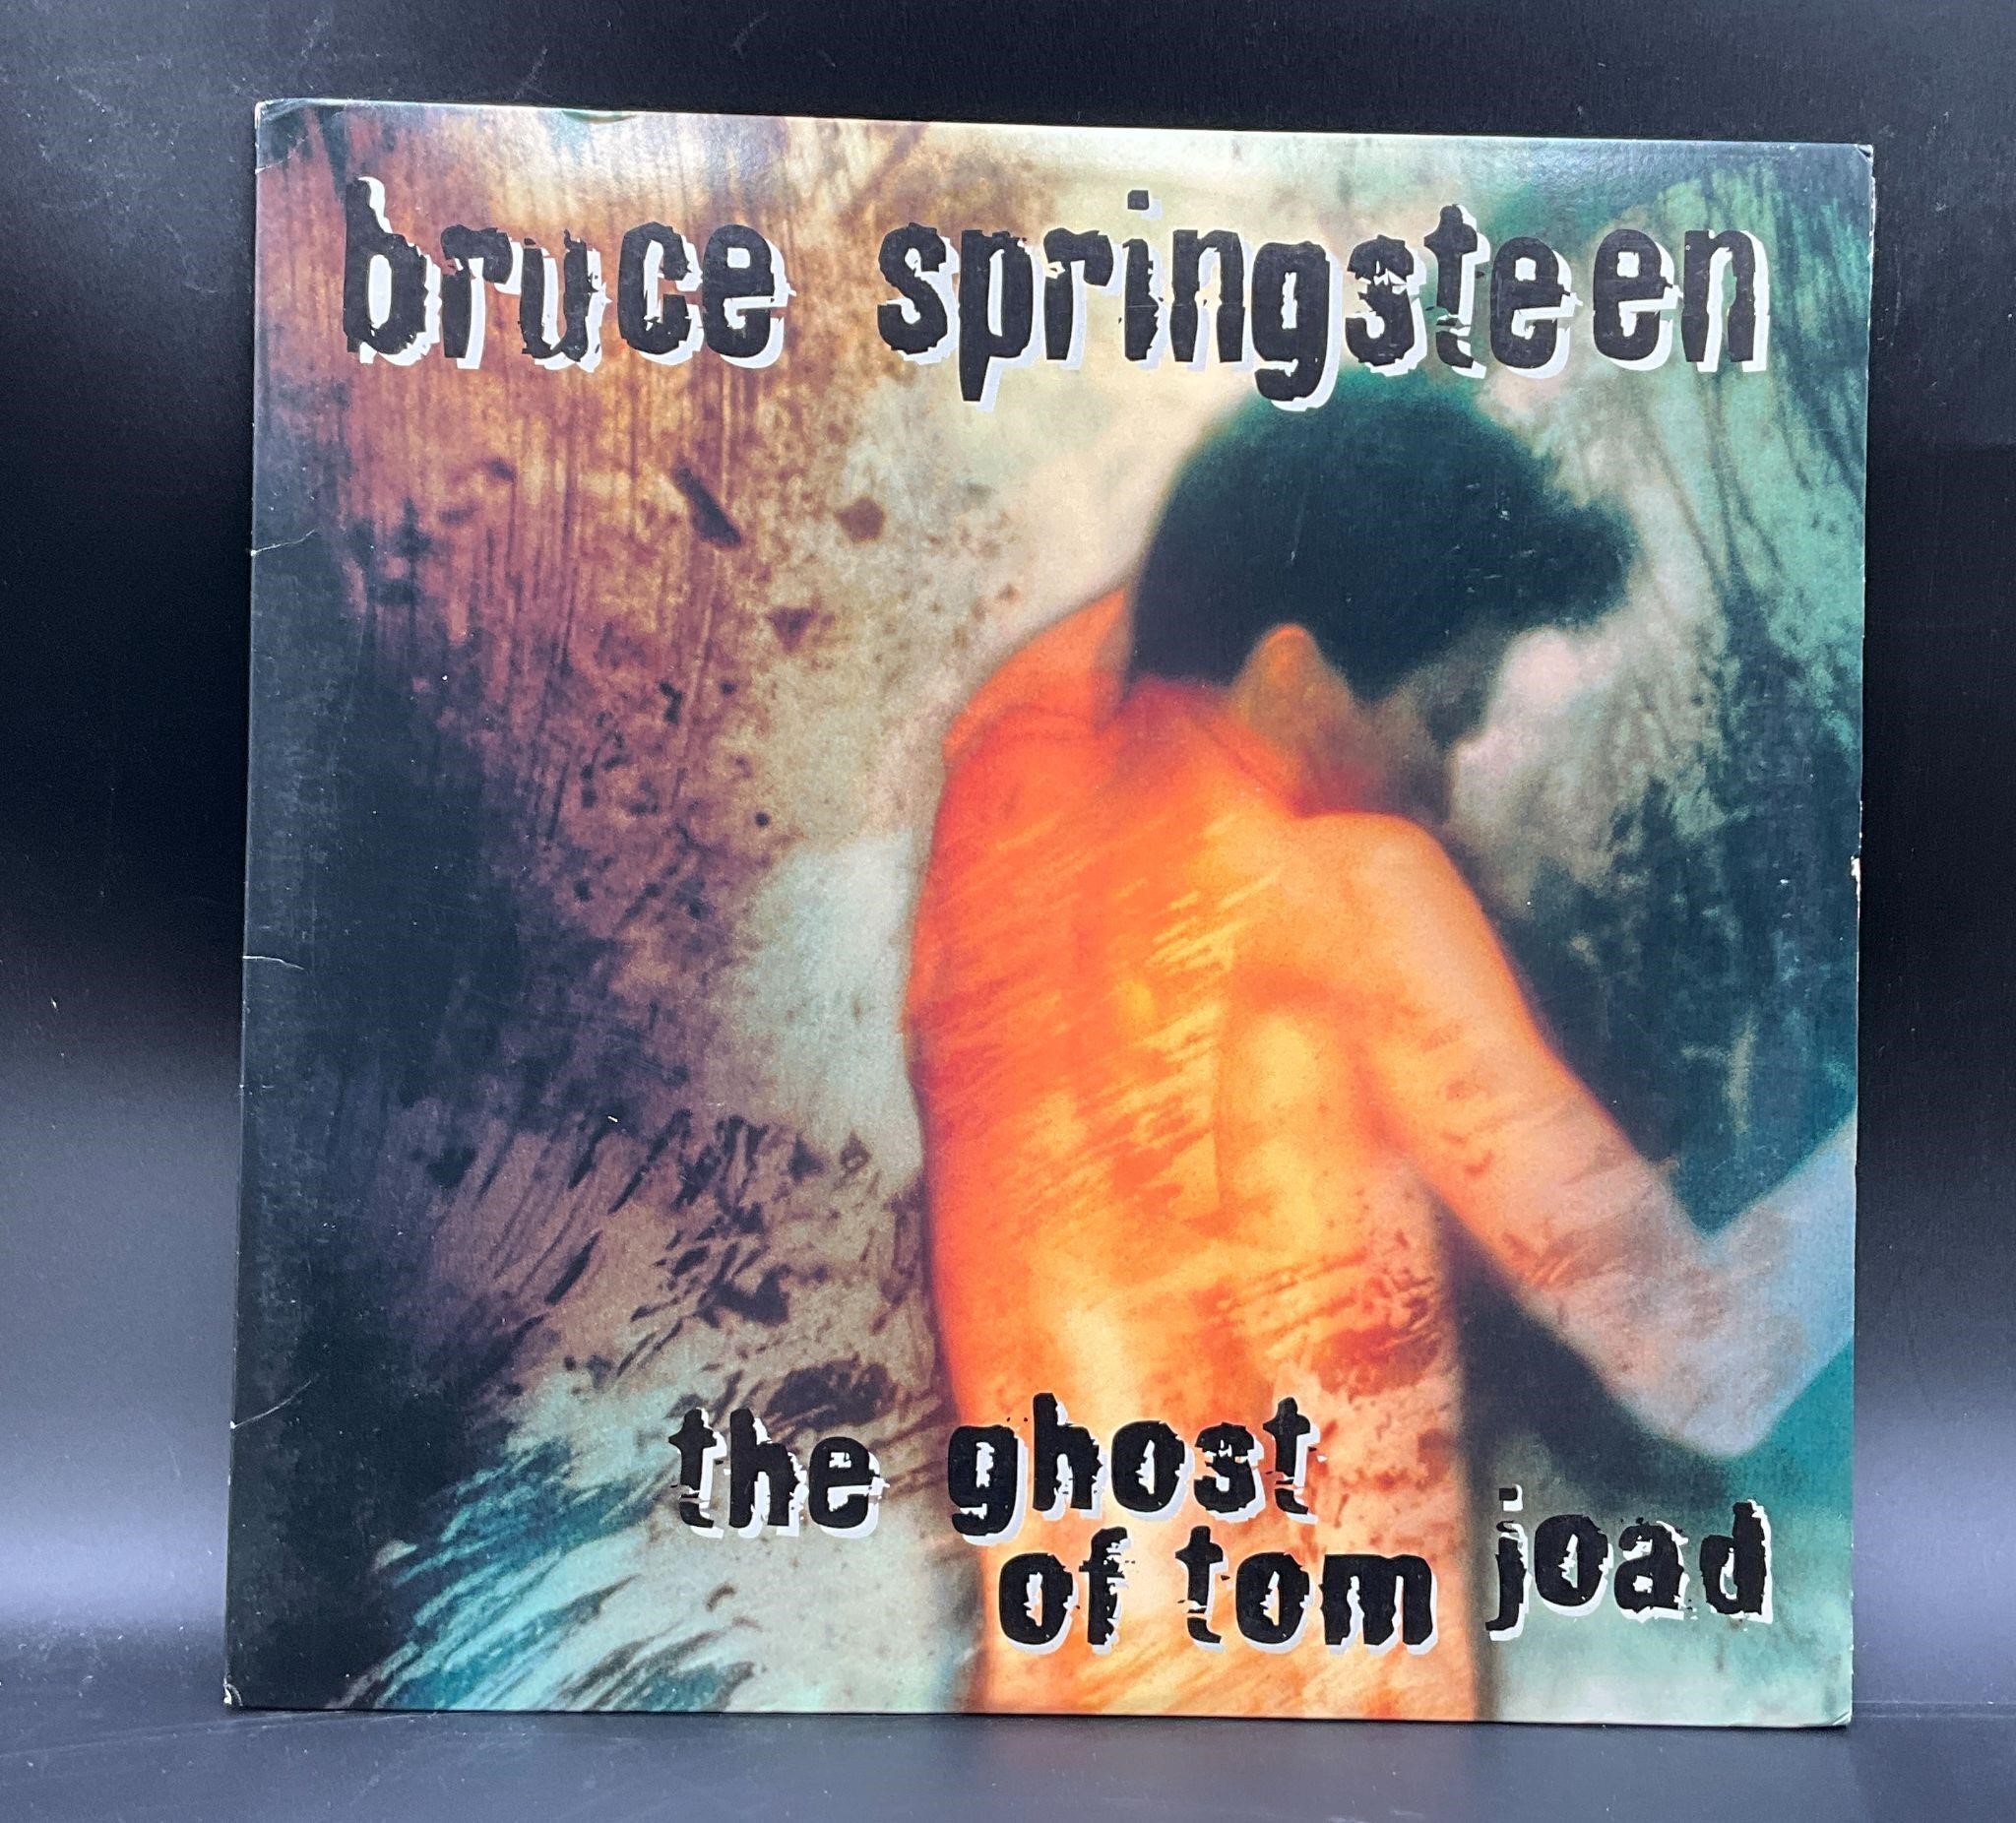 1995 Bruce Springsteen "The Ghost Of Tom Joad" LP